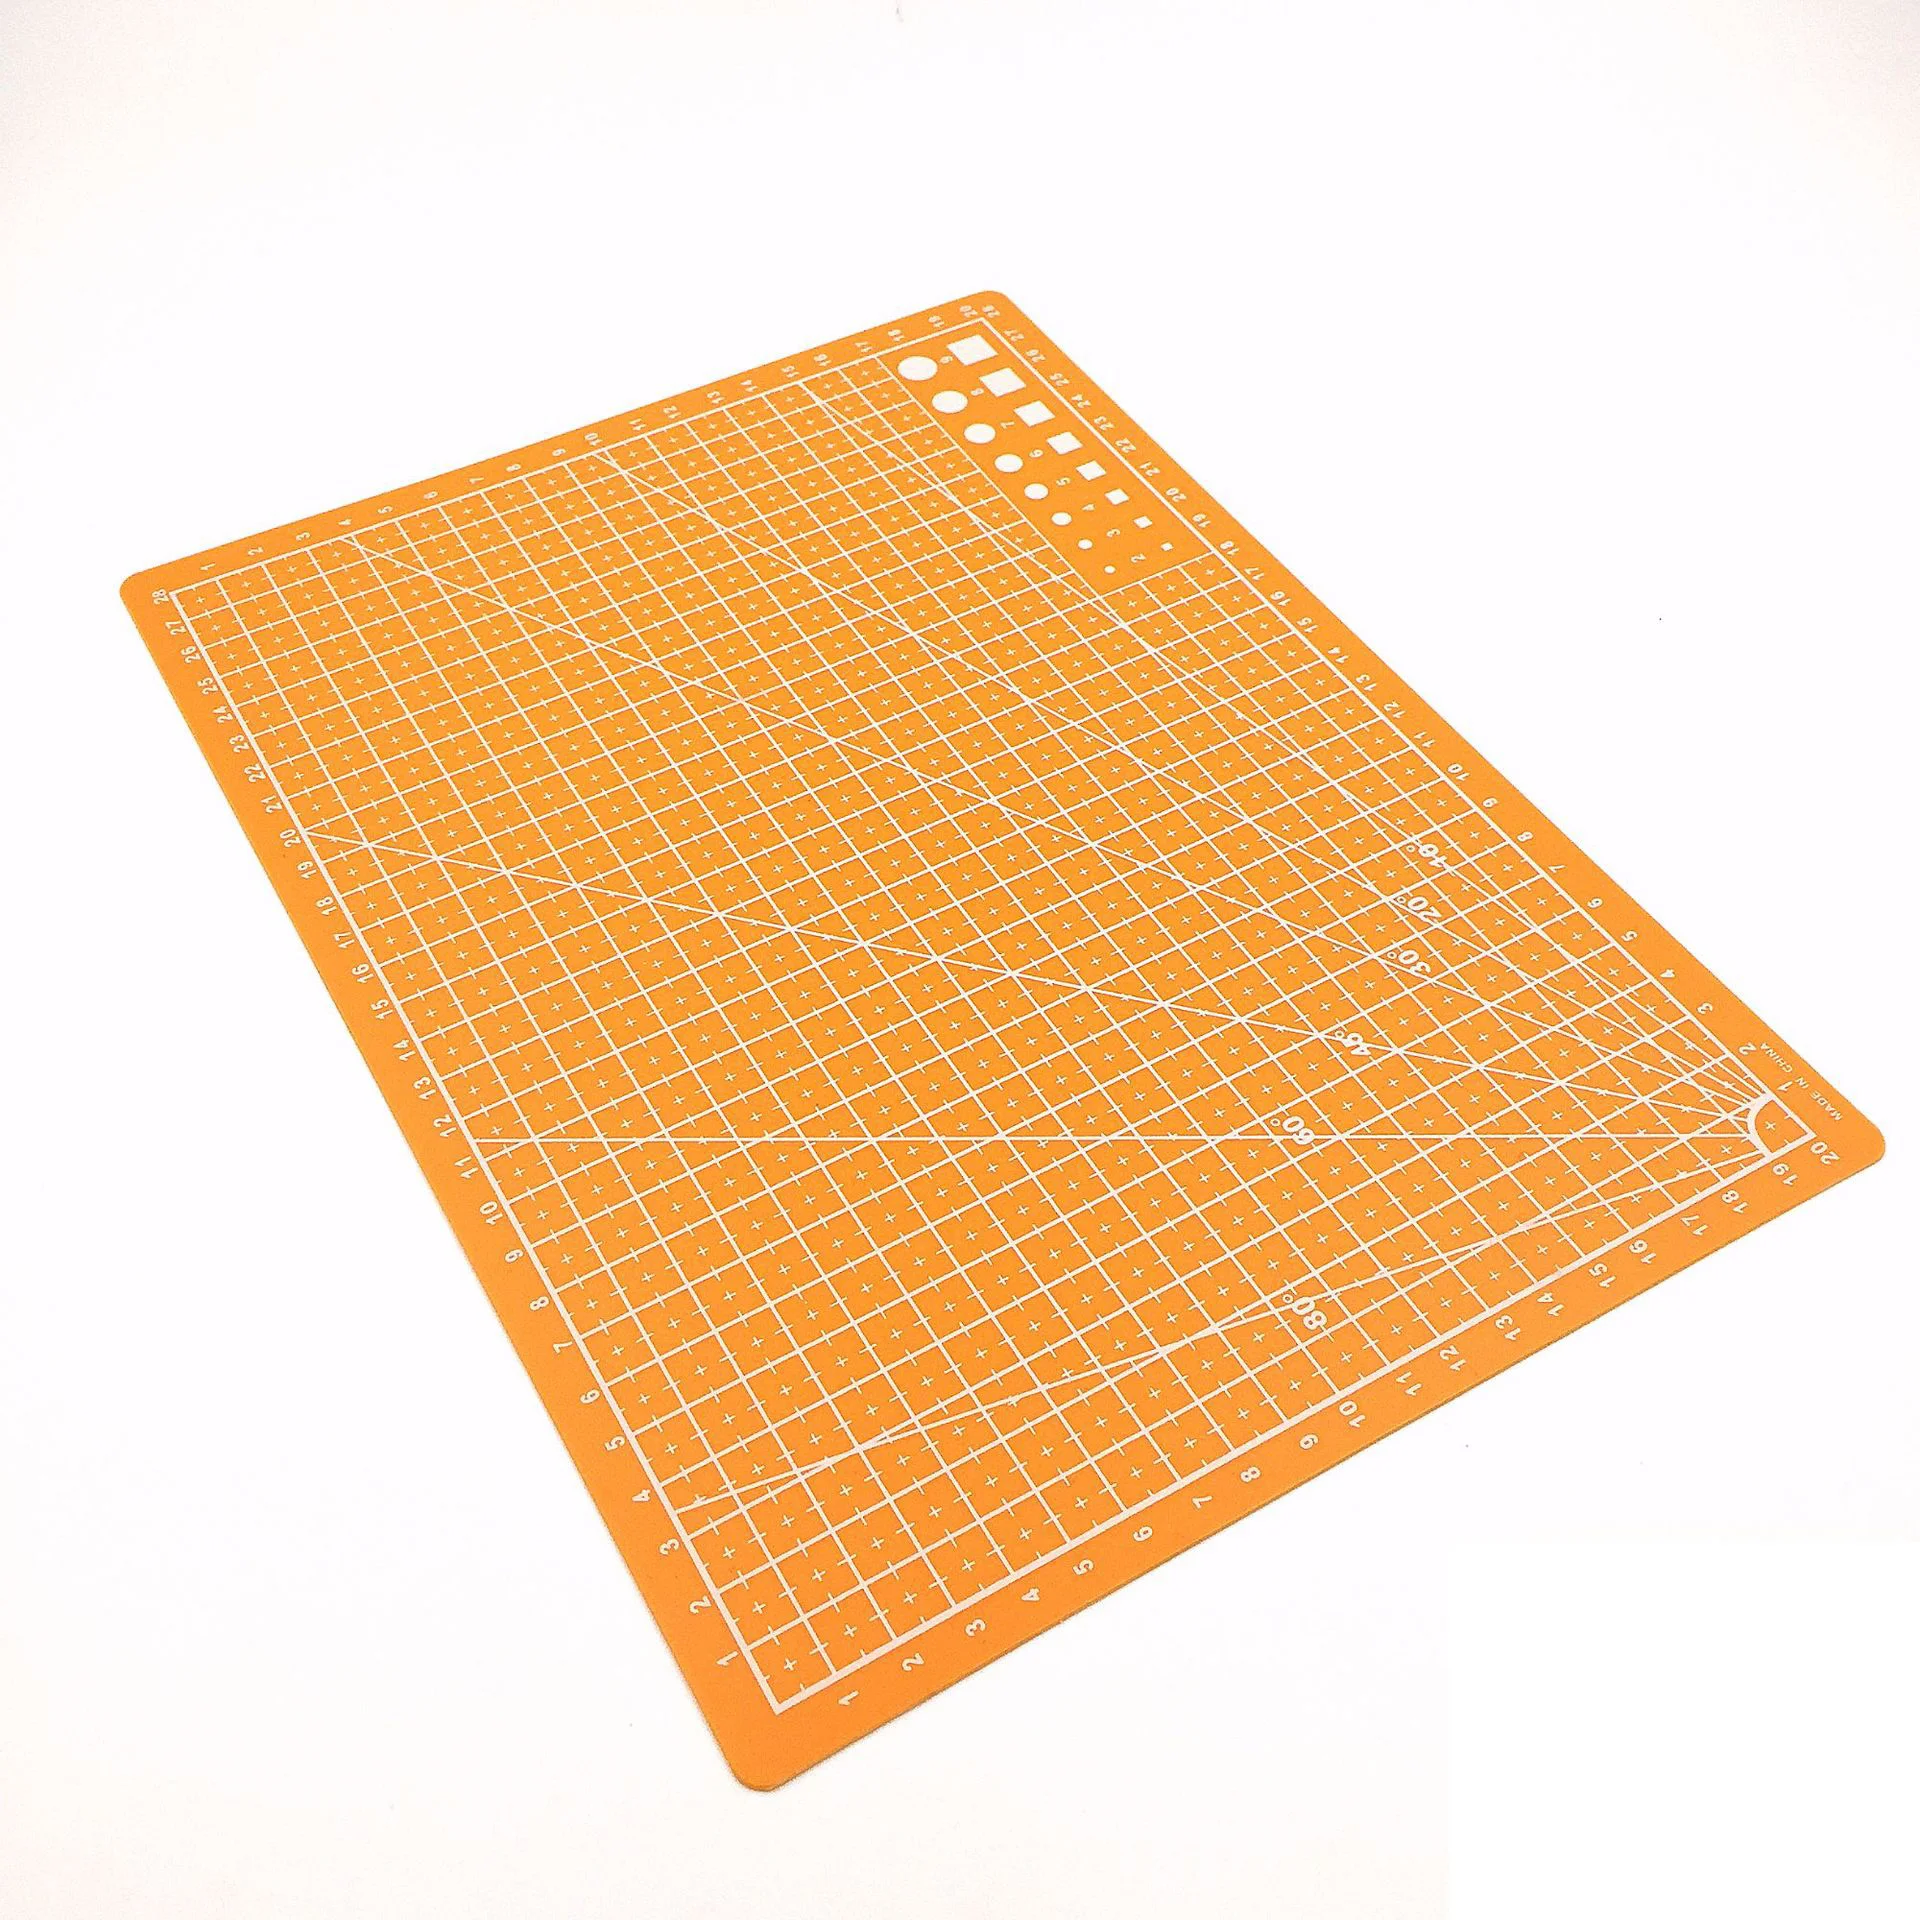 A0 Self Healing Large Pvc Silicone Rubber Scrapbook Flexible Plastic Cutting Mat Buy Scrapbook